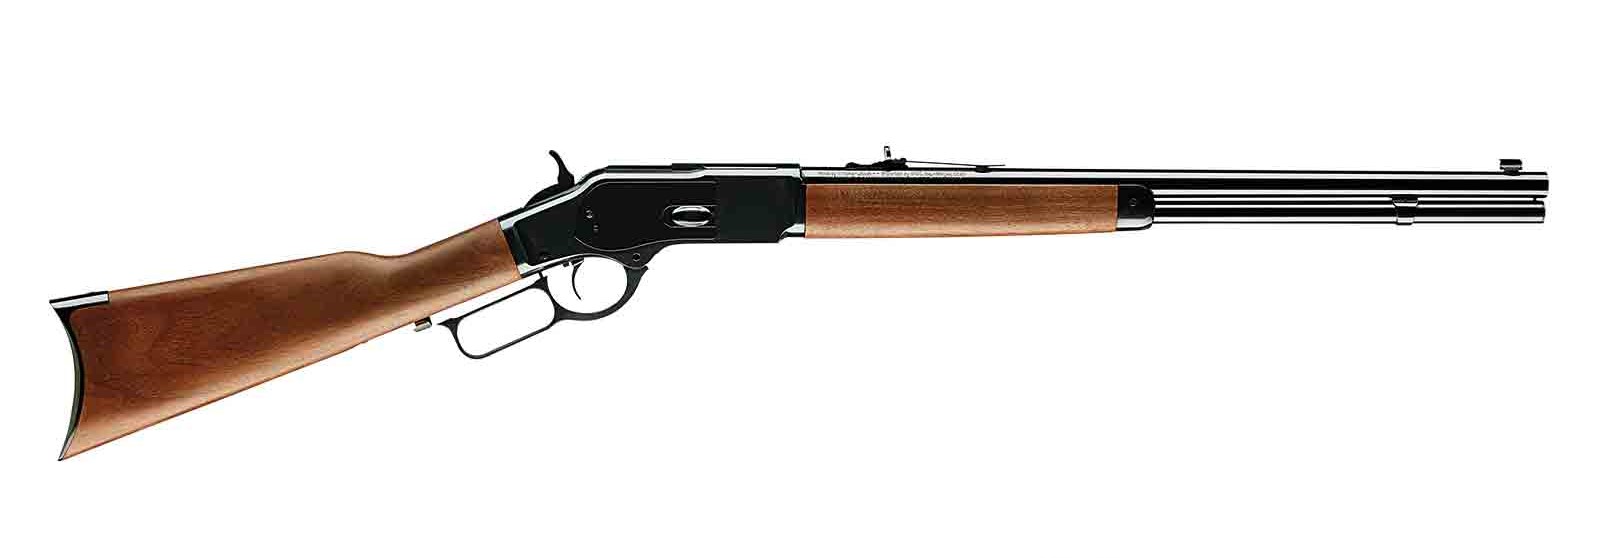 Winchester M73 Unterhebelrepetierbüchse Kaliber .357Mag